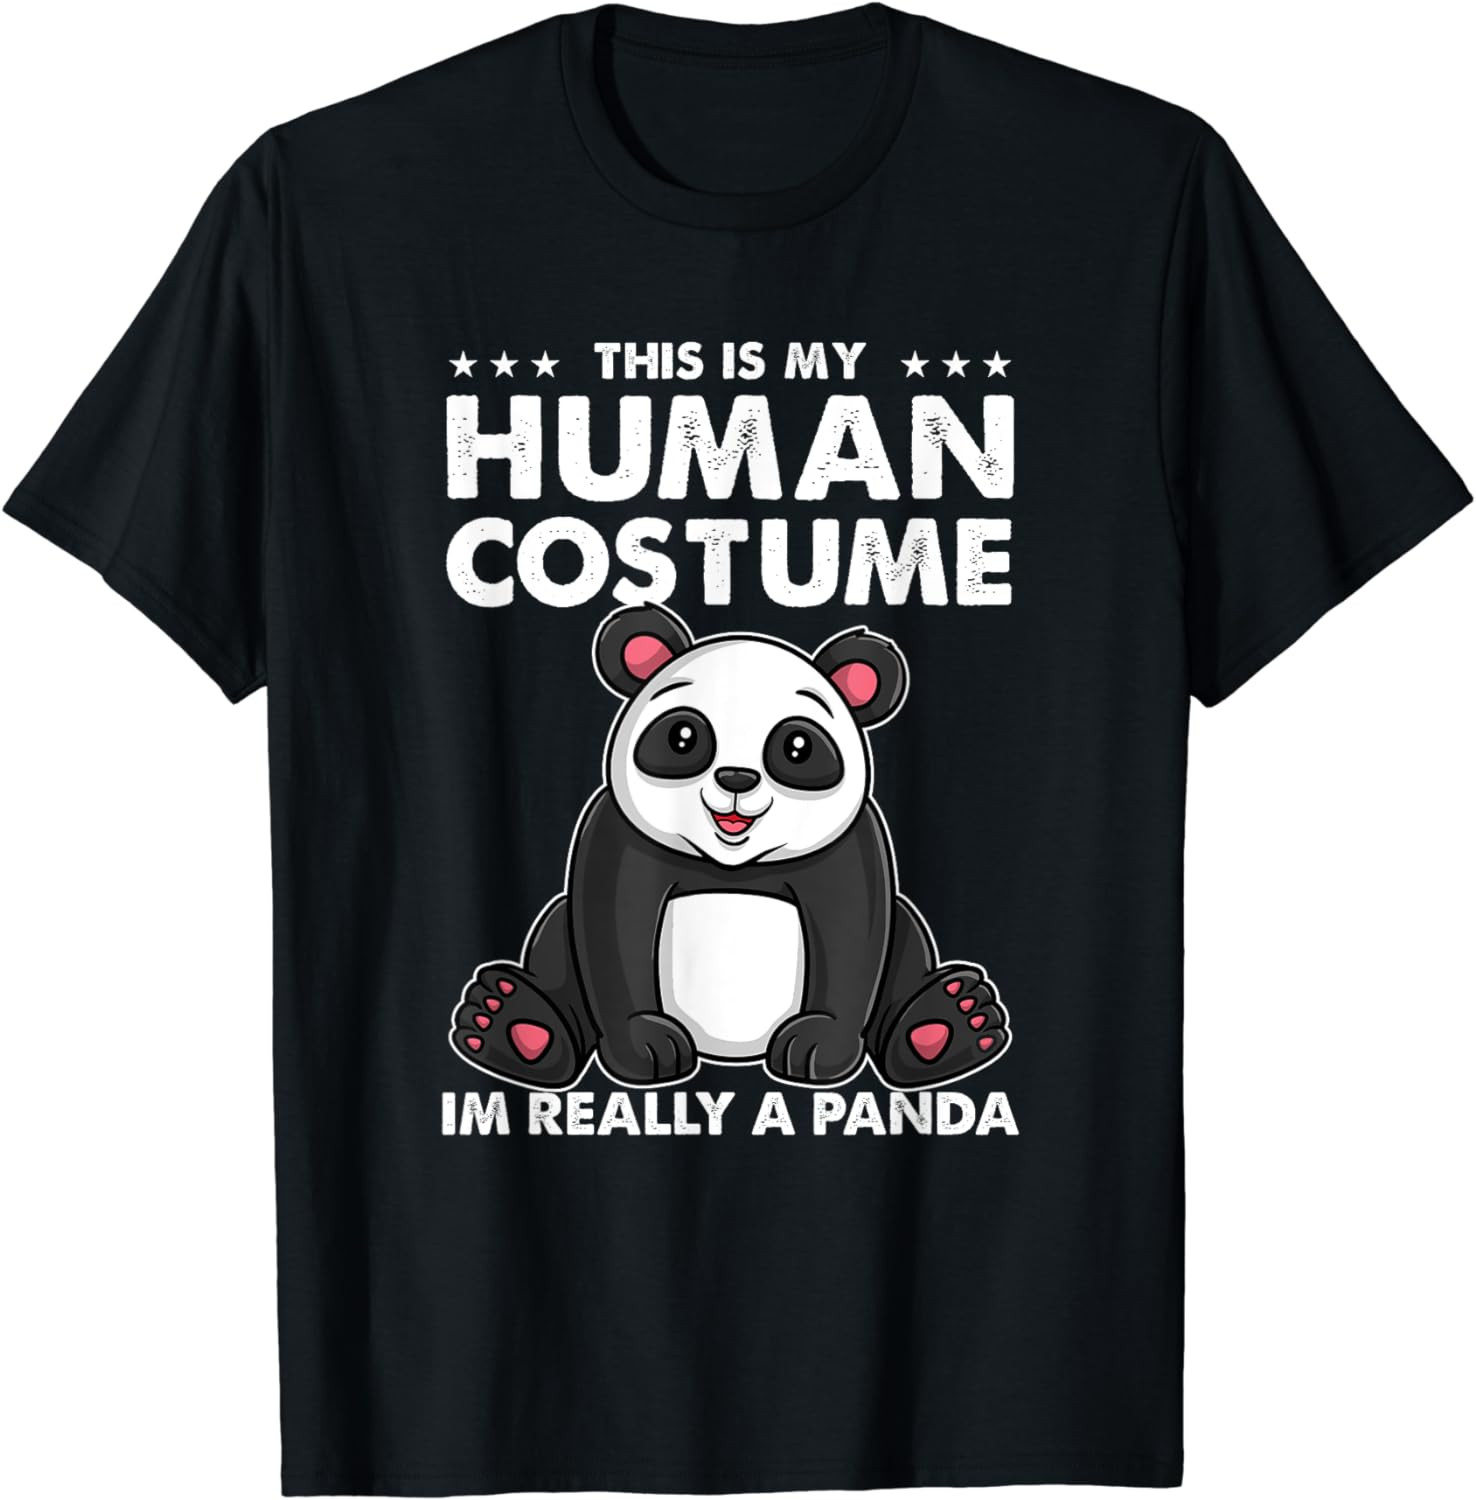 This Is My Human Costume Im Really A Panda Halloween T-Shirt